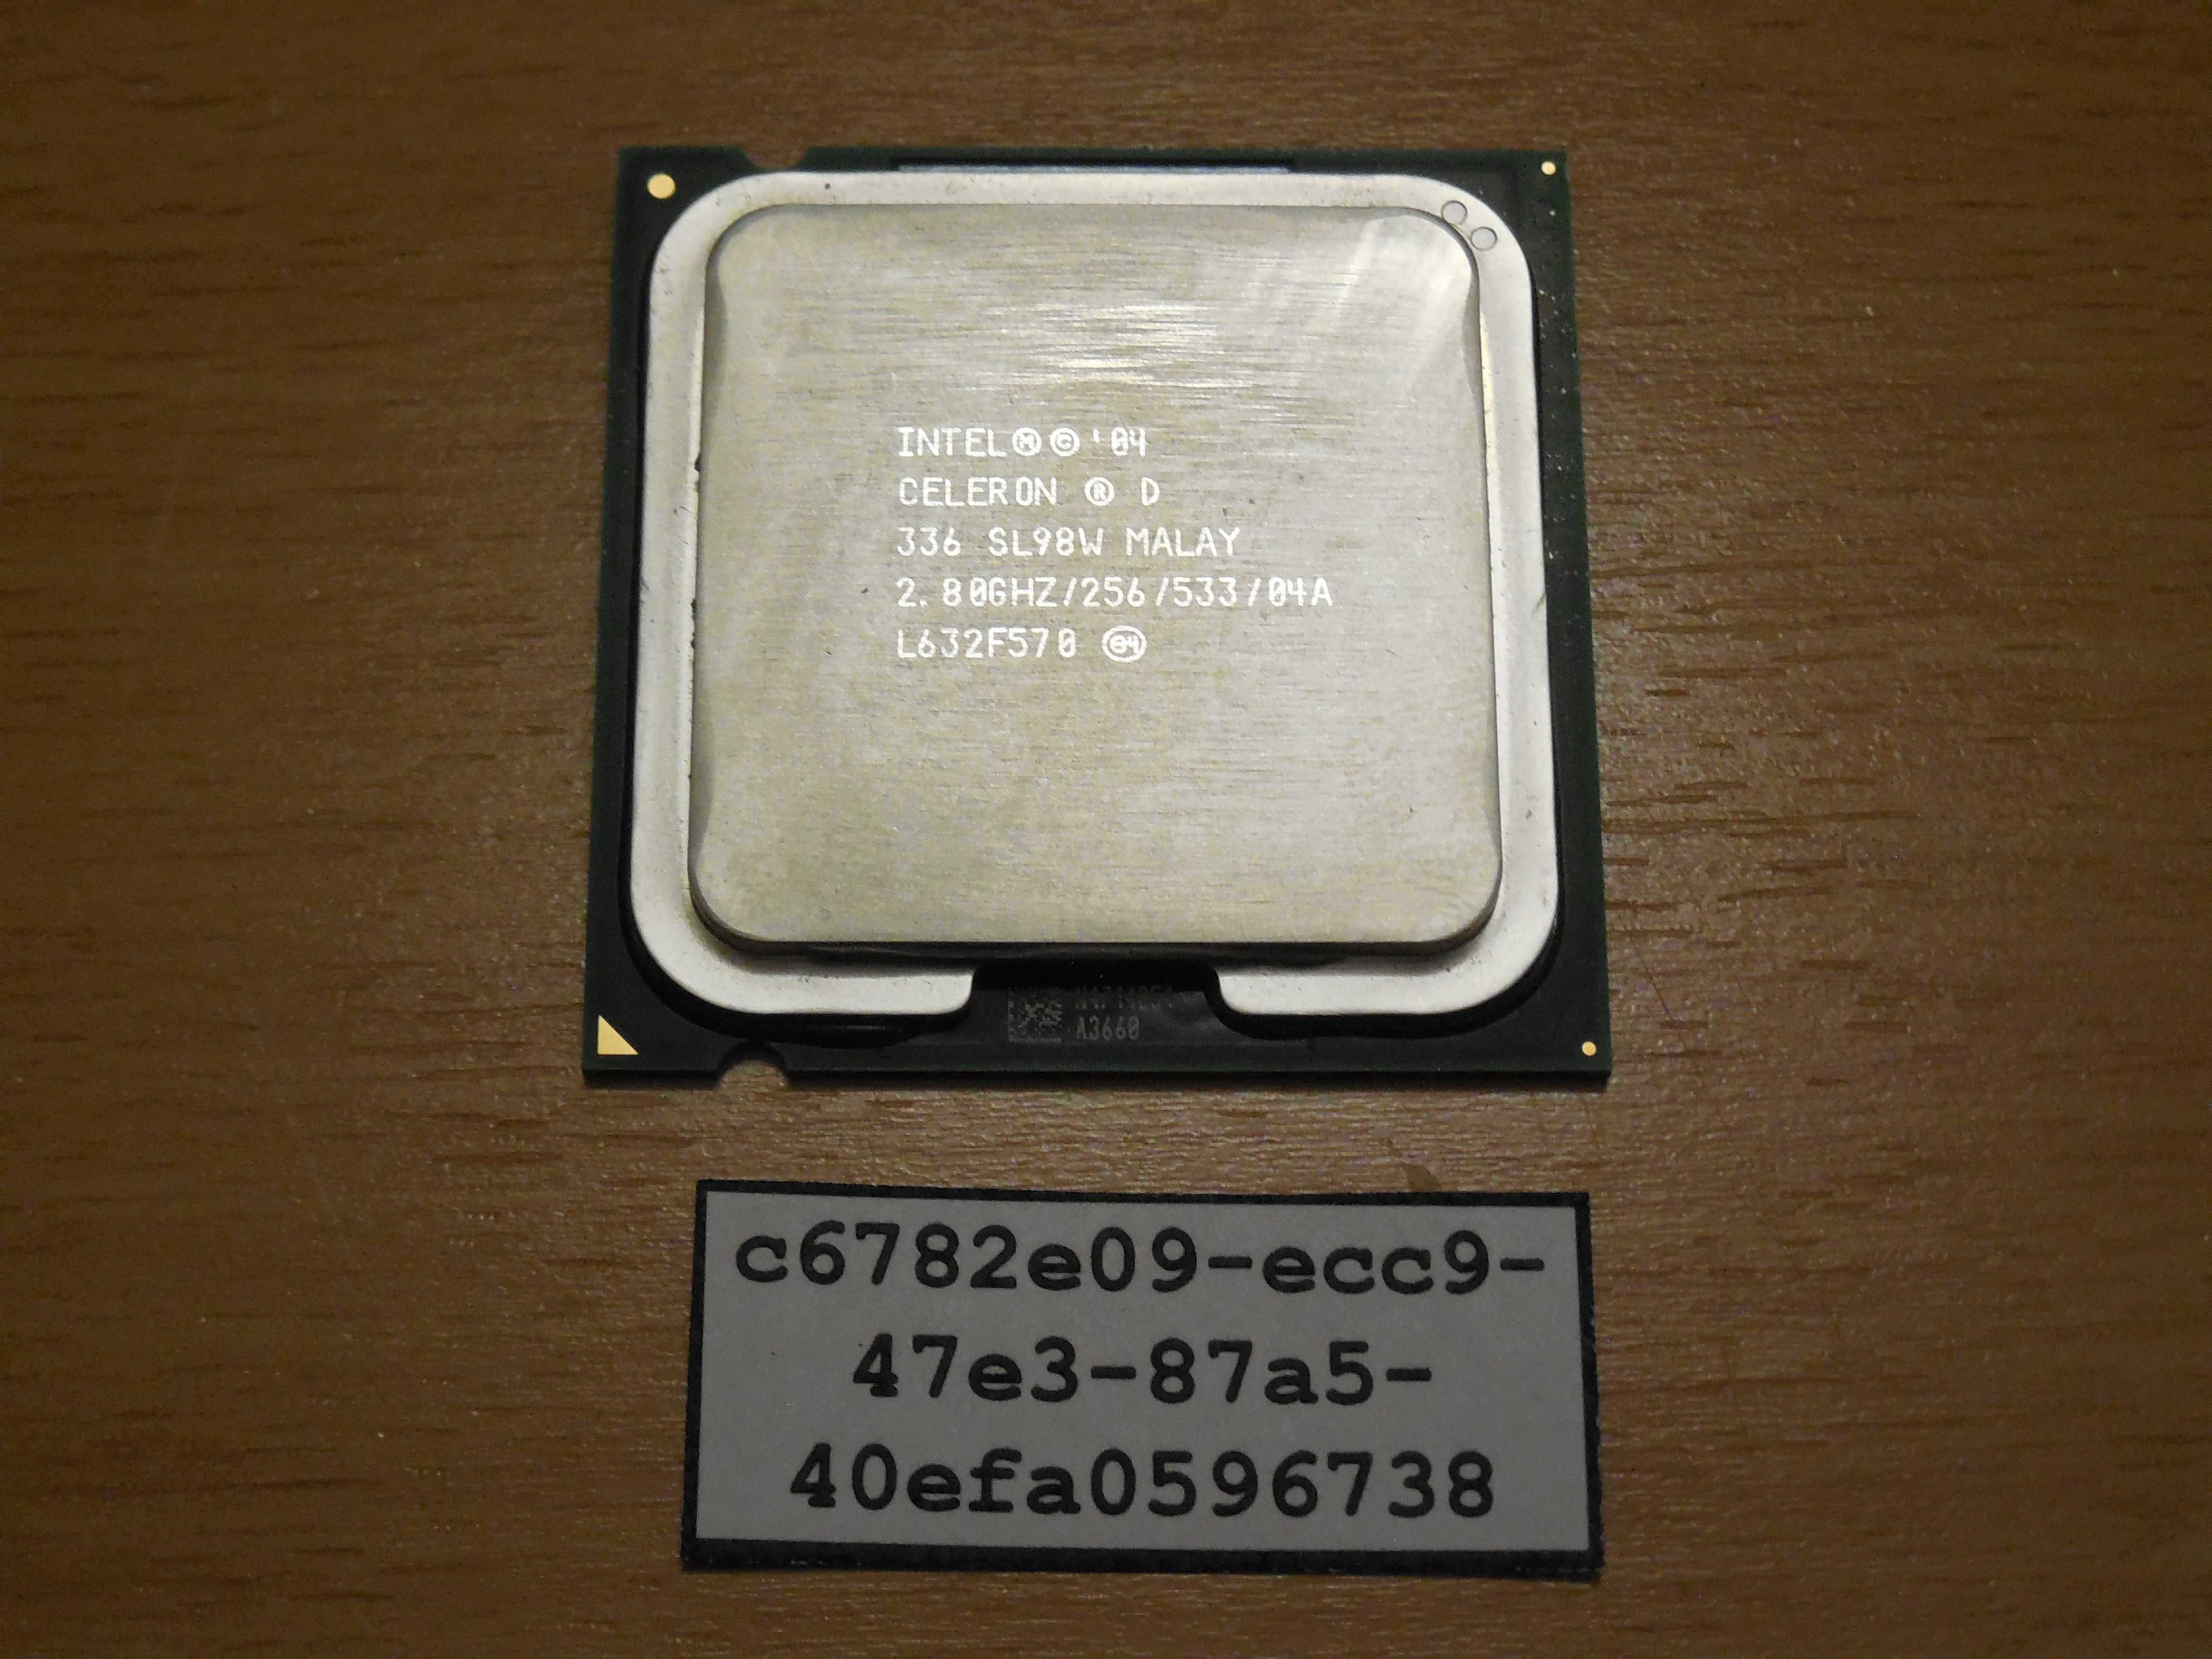 Интел селерон характеристики. Intel 04 Celeron d 2.66GHZ/256/533. Intel Celeron d 2.8 GHZ 256 533 04a. Celeron 04 d. Процессор Intel 03 Celeron d 2.80GHZ/256/533.